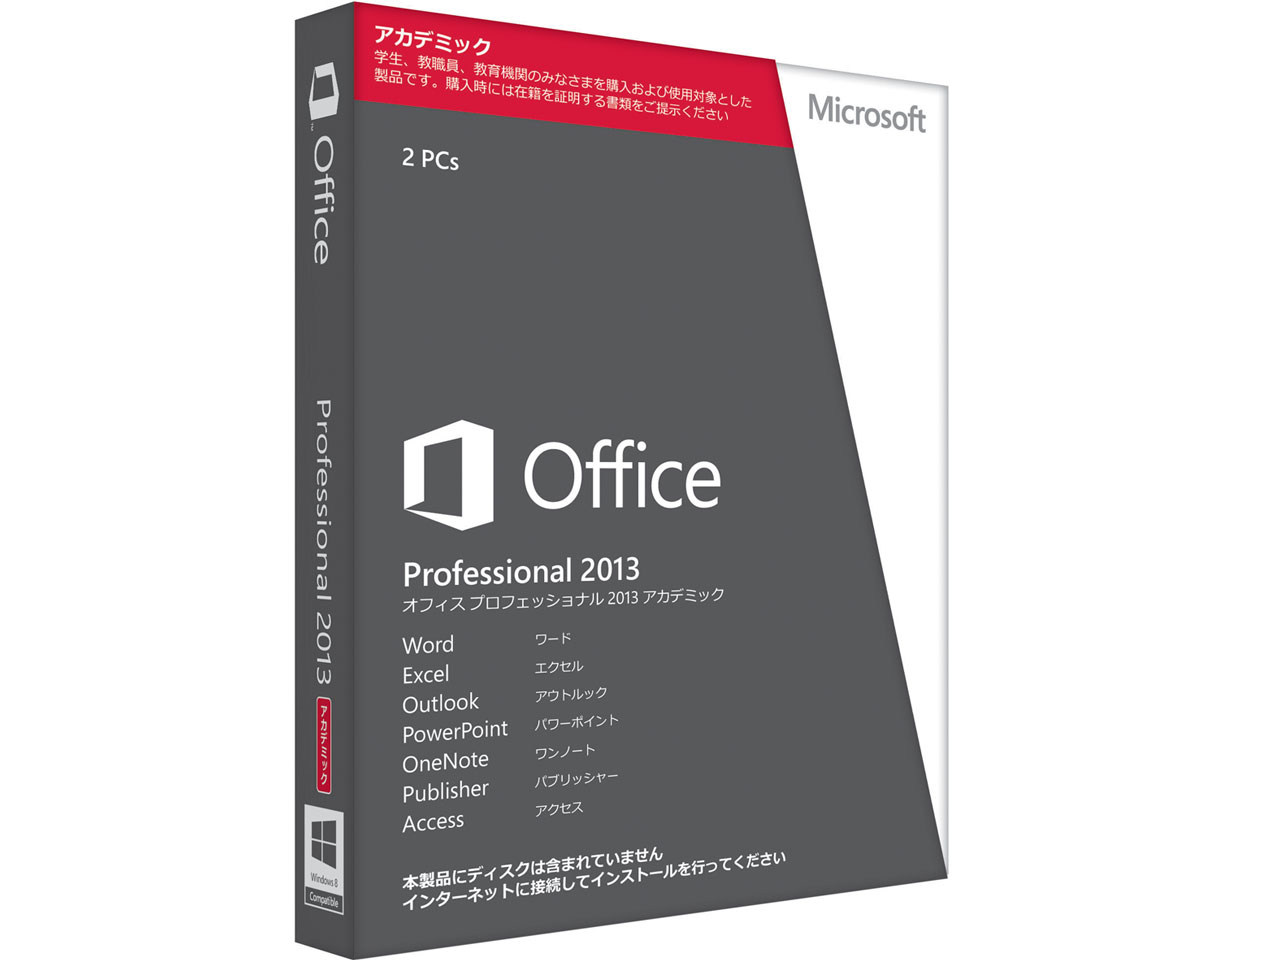 Office Professional 2013 アカデミック版 の製品画像